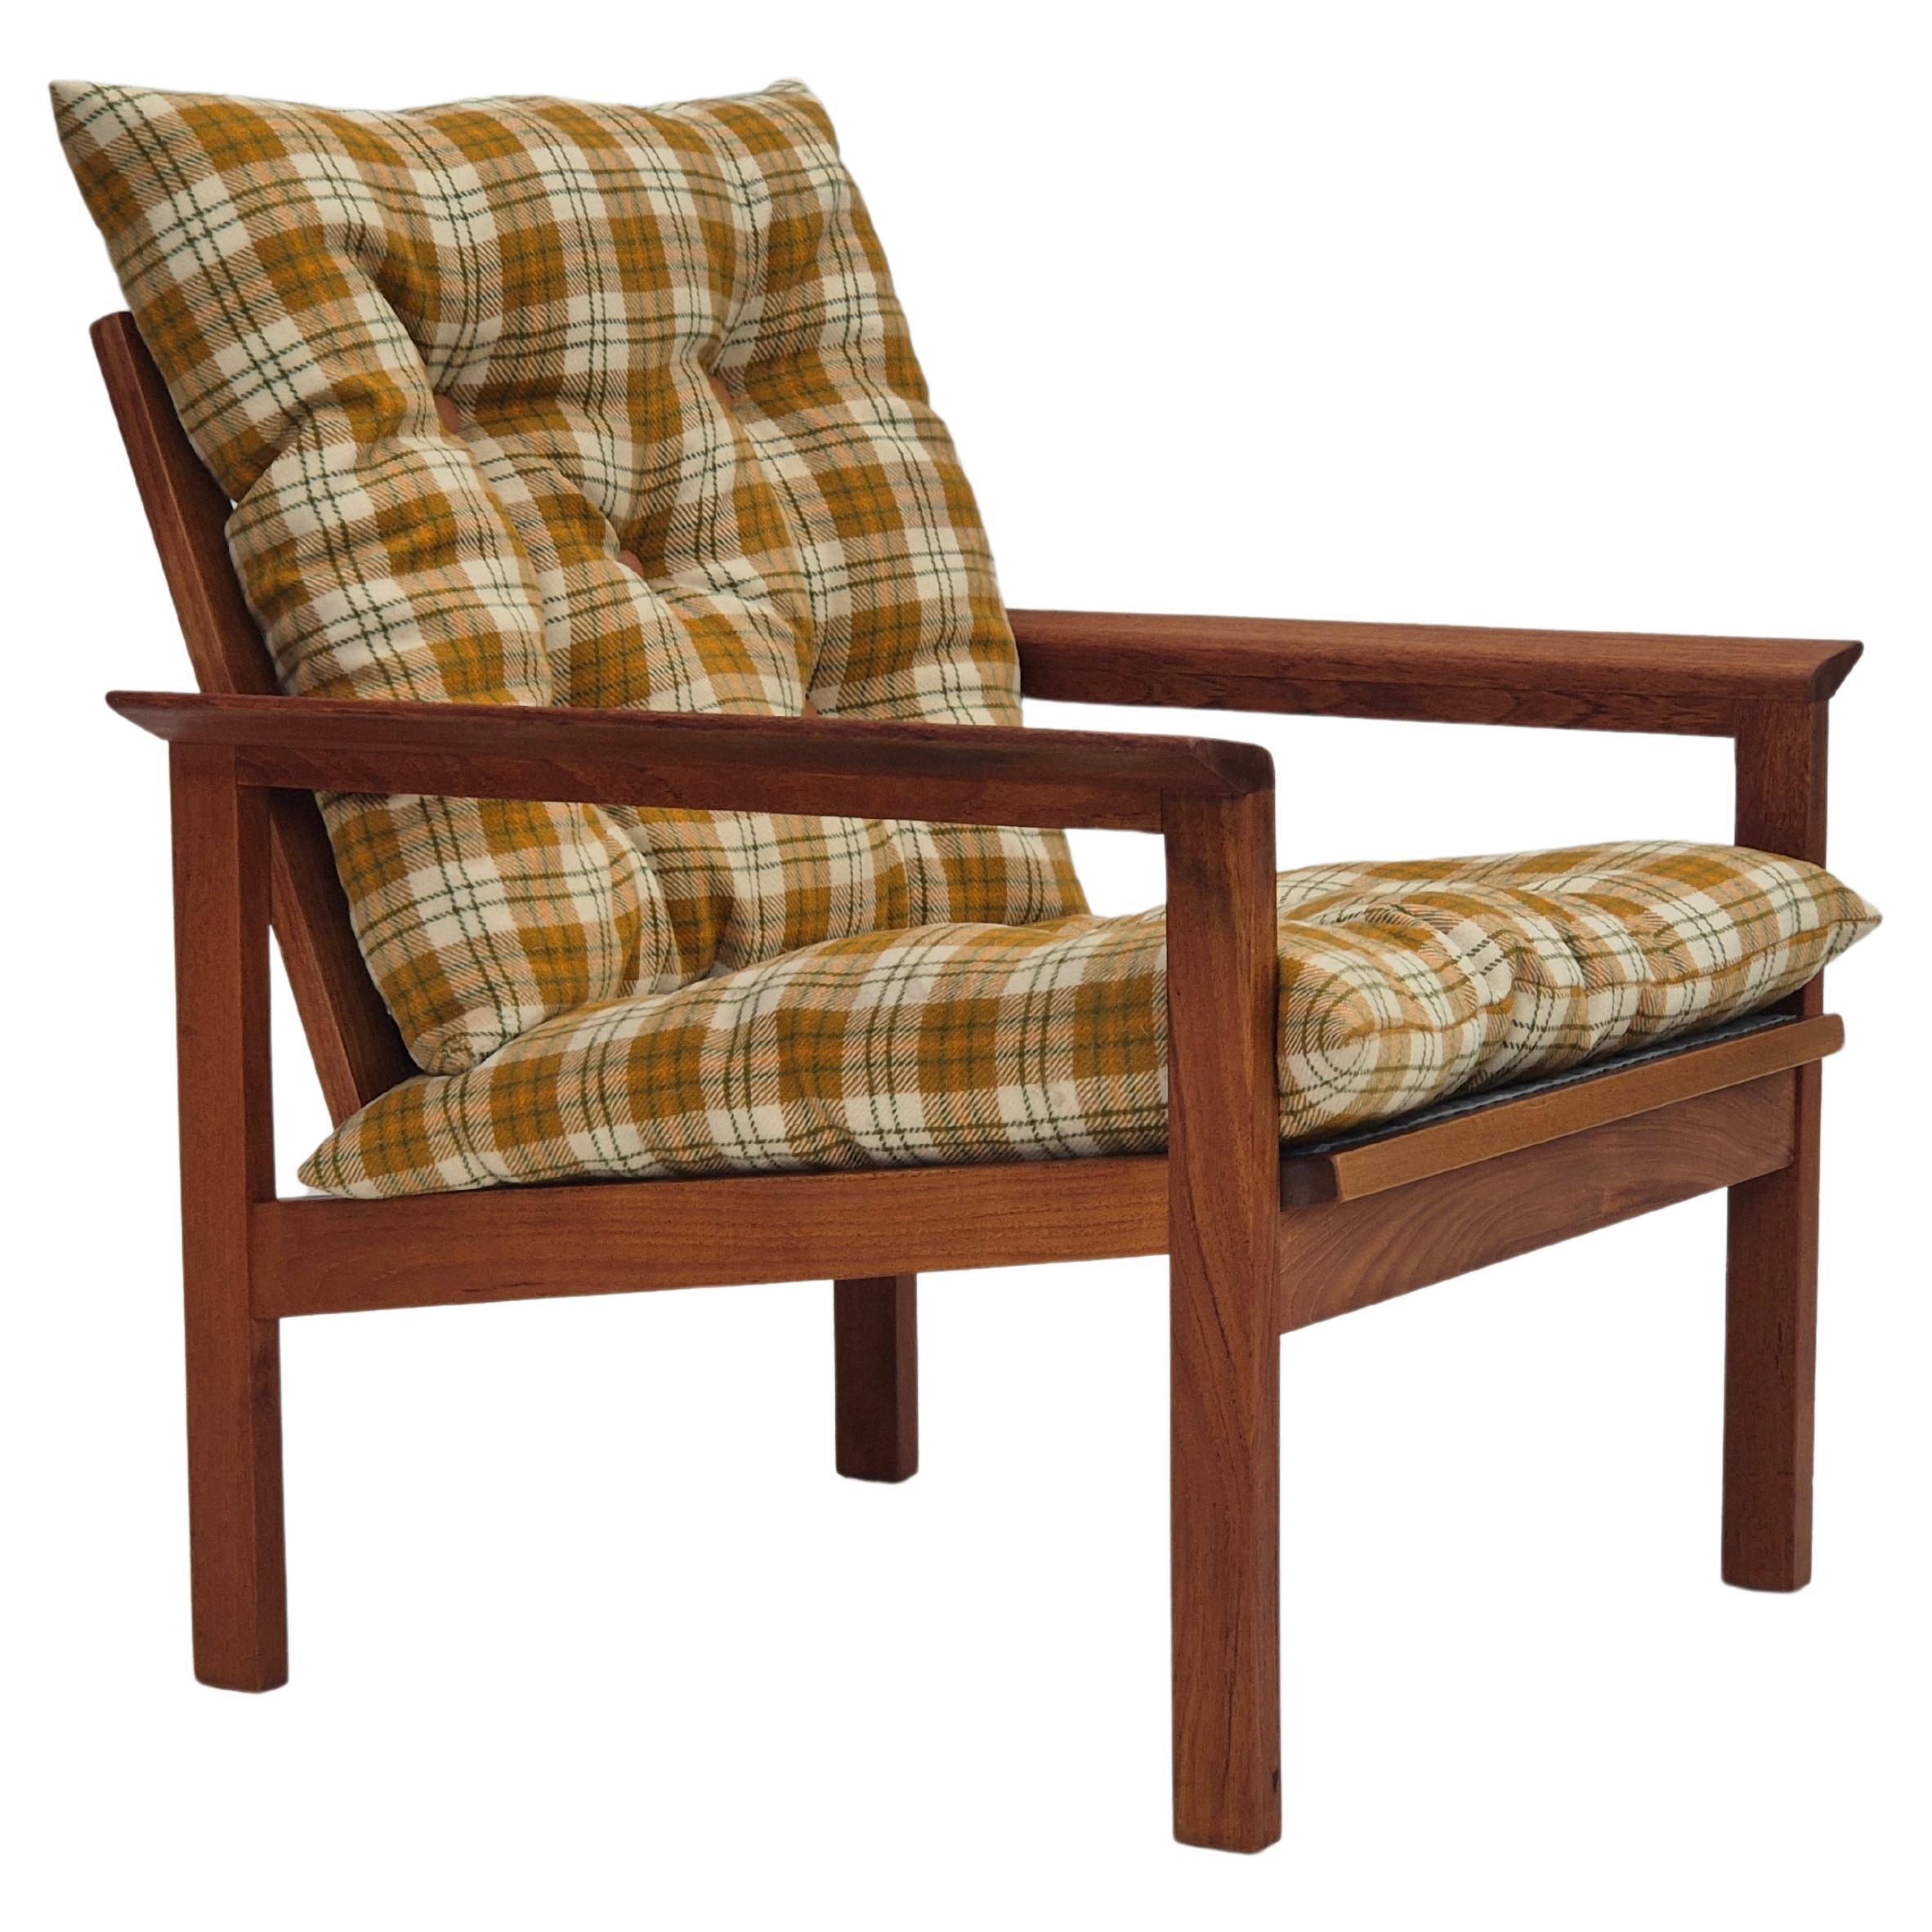 1970s, Danish lounge chair, original condition, furniture wool fabric, teak wood For Sale